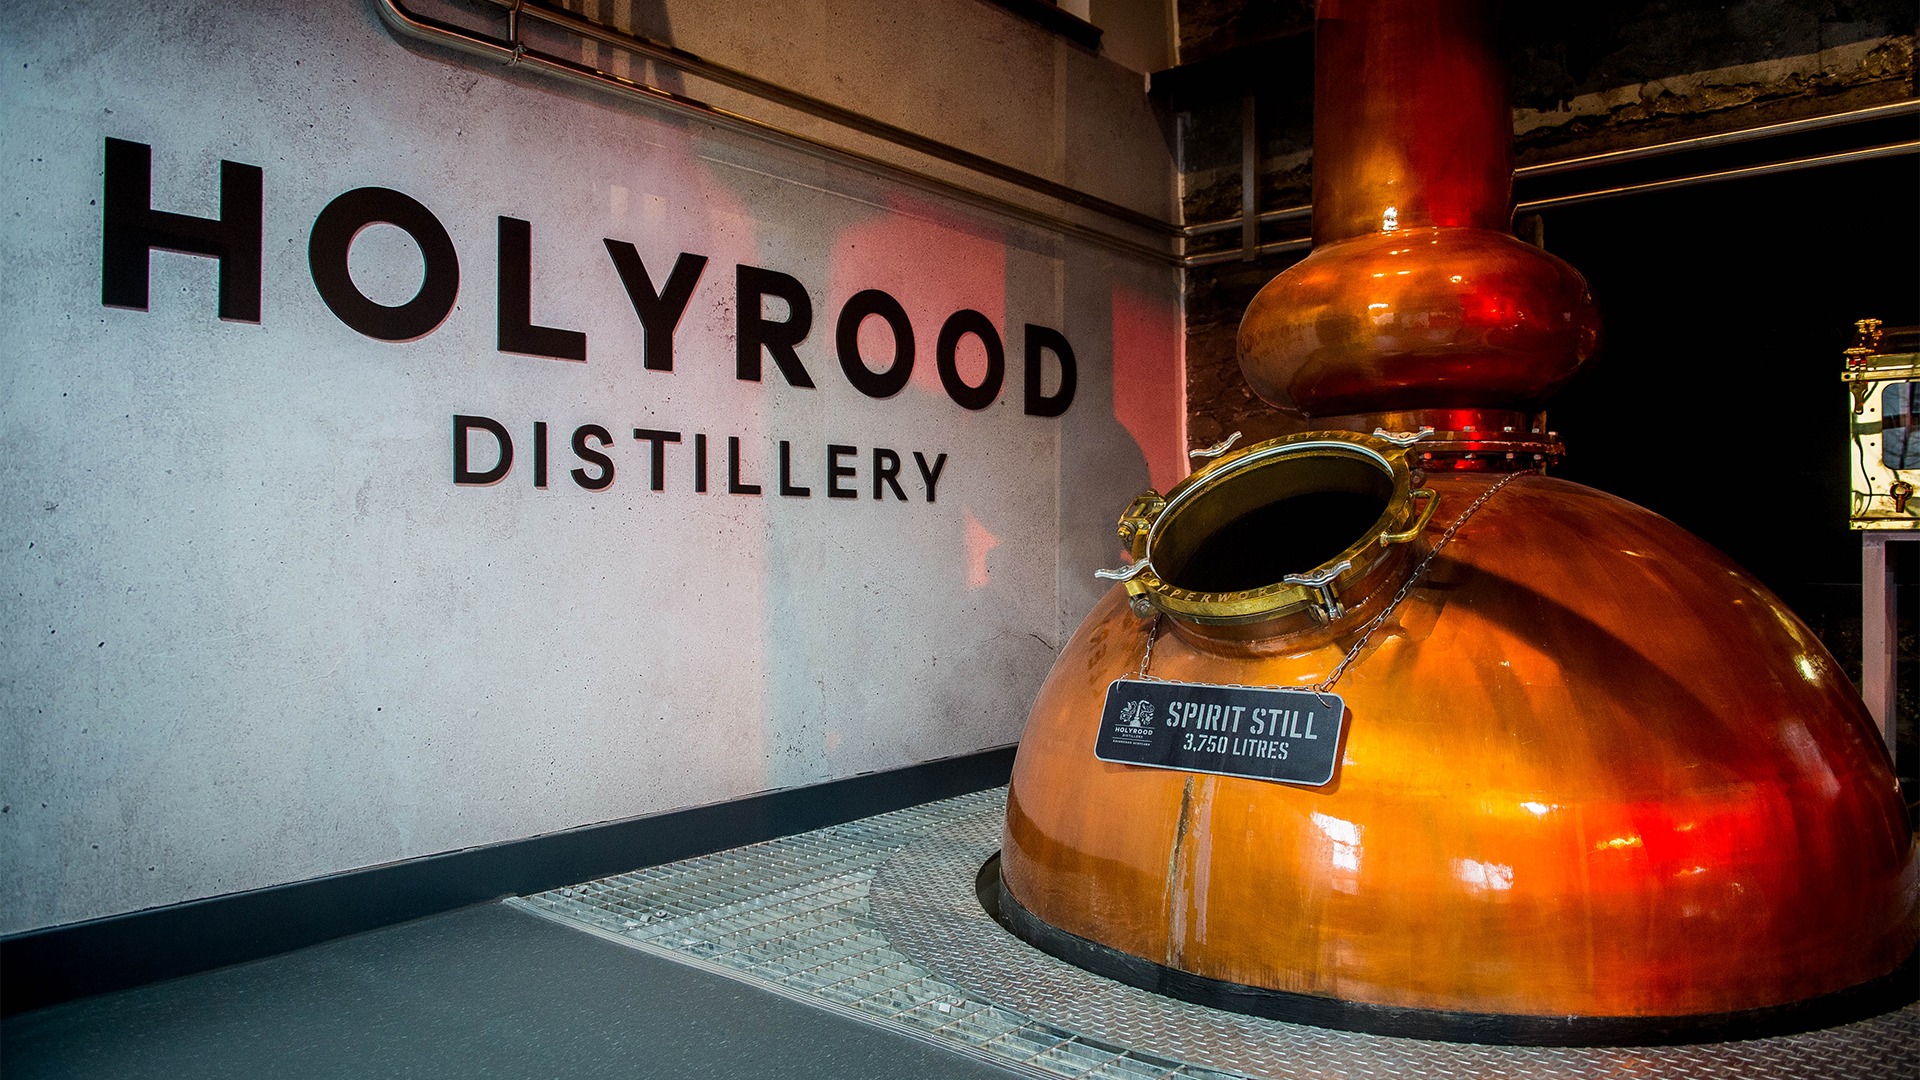 Edinburgh first single malt whisky distillery in nearly 100 years! 3